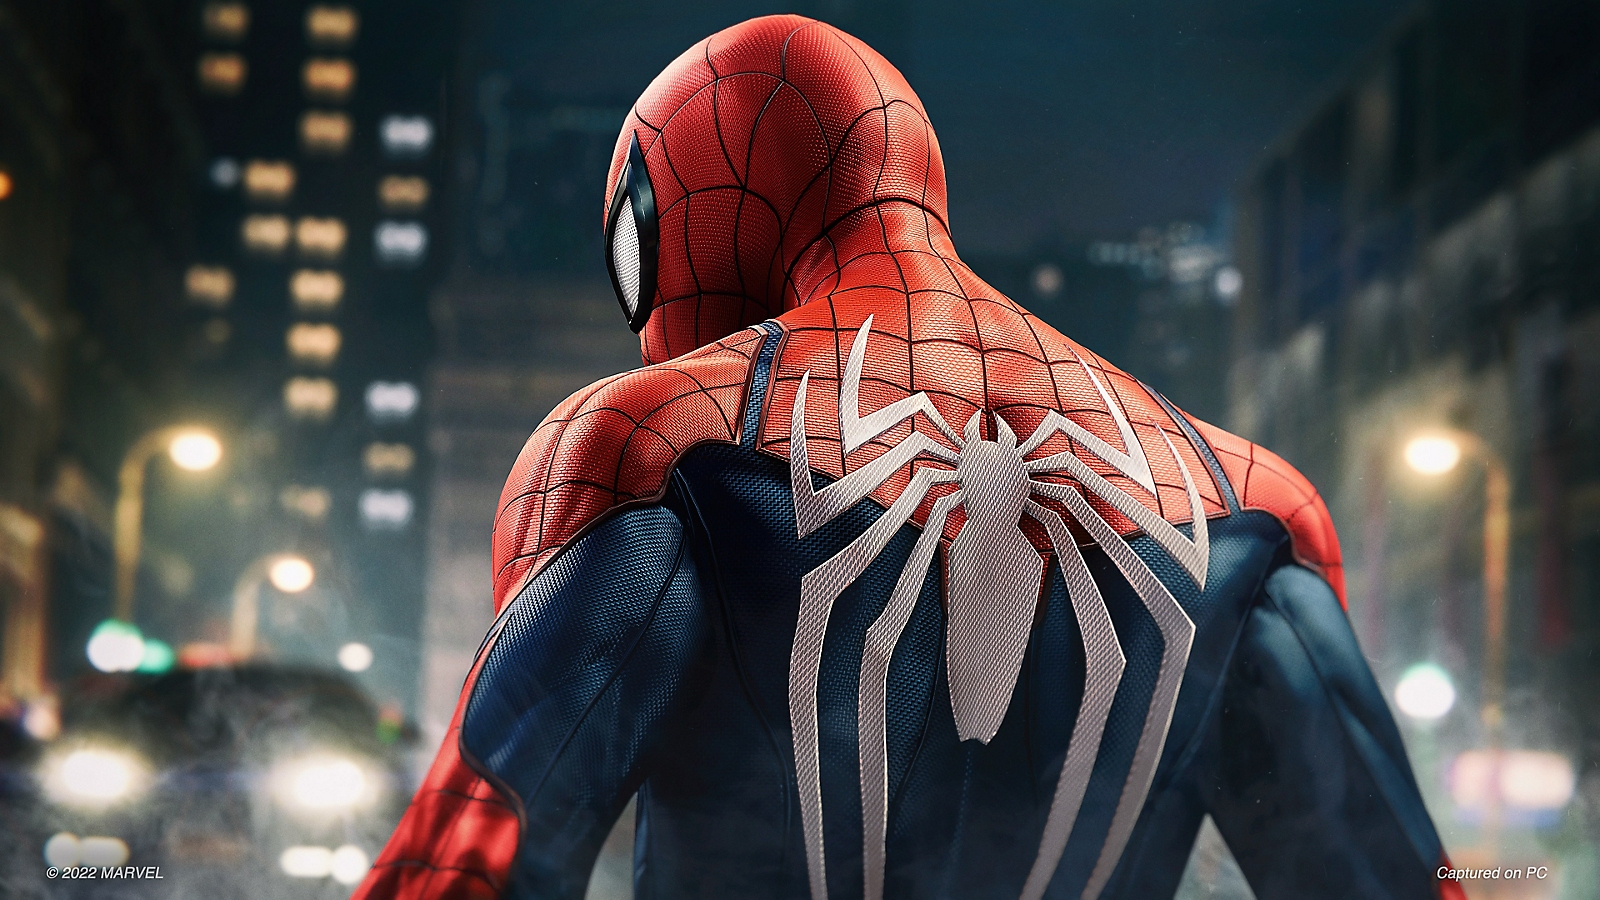 marvels-spider-man-remastered-pc-screenshot-heroic-4K-en-11jul22